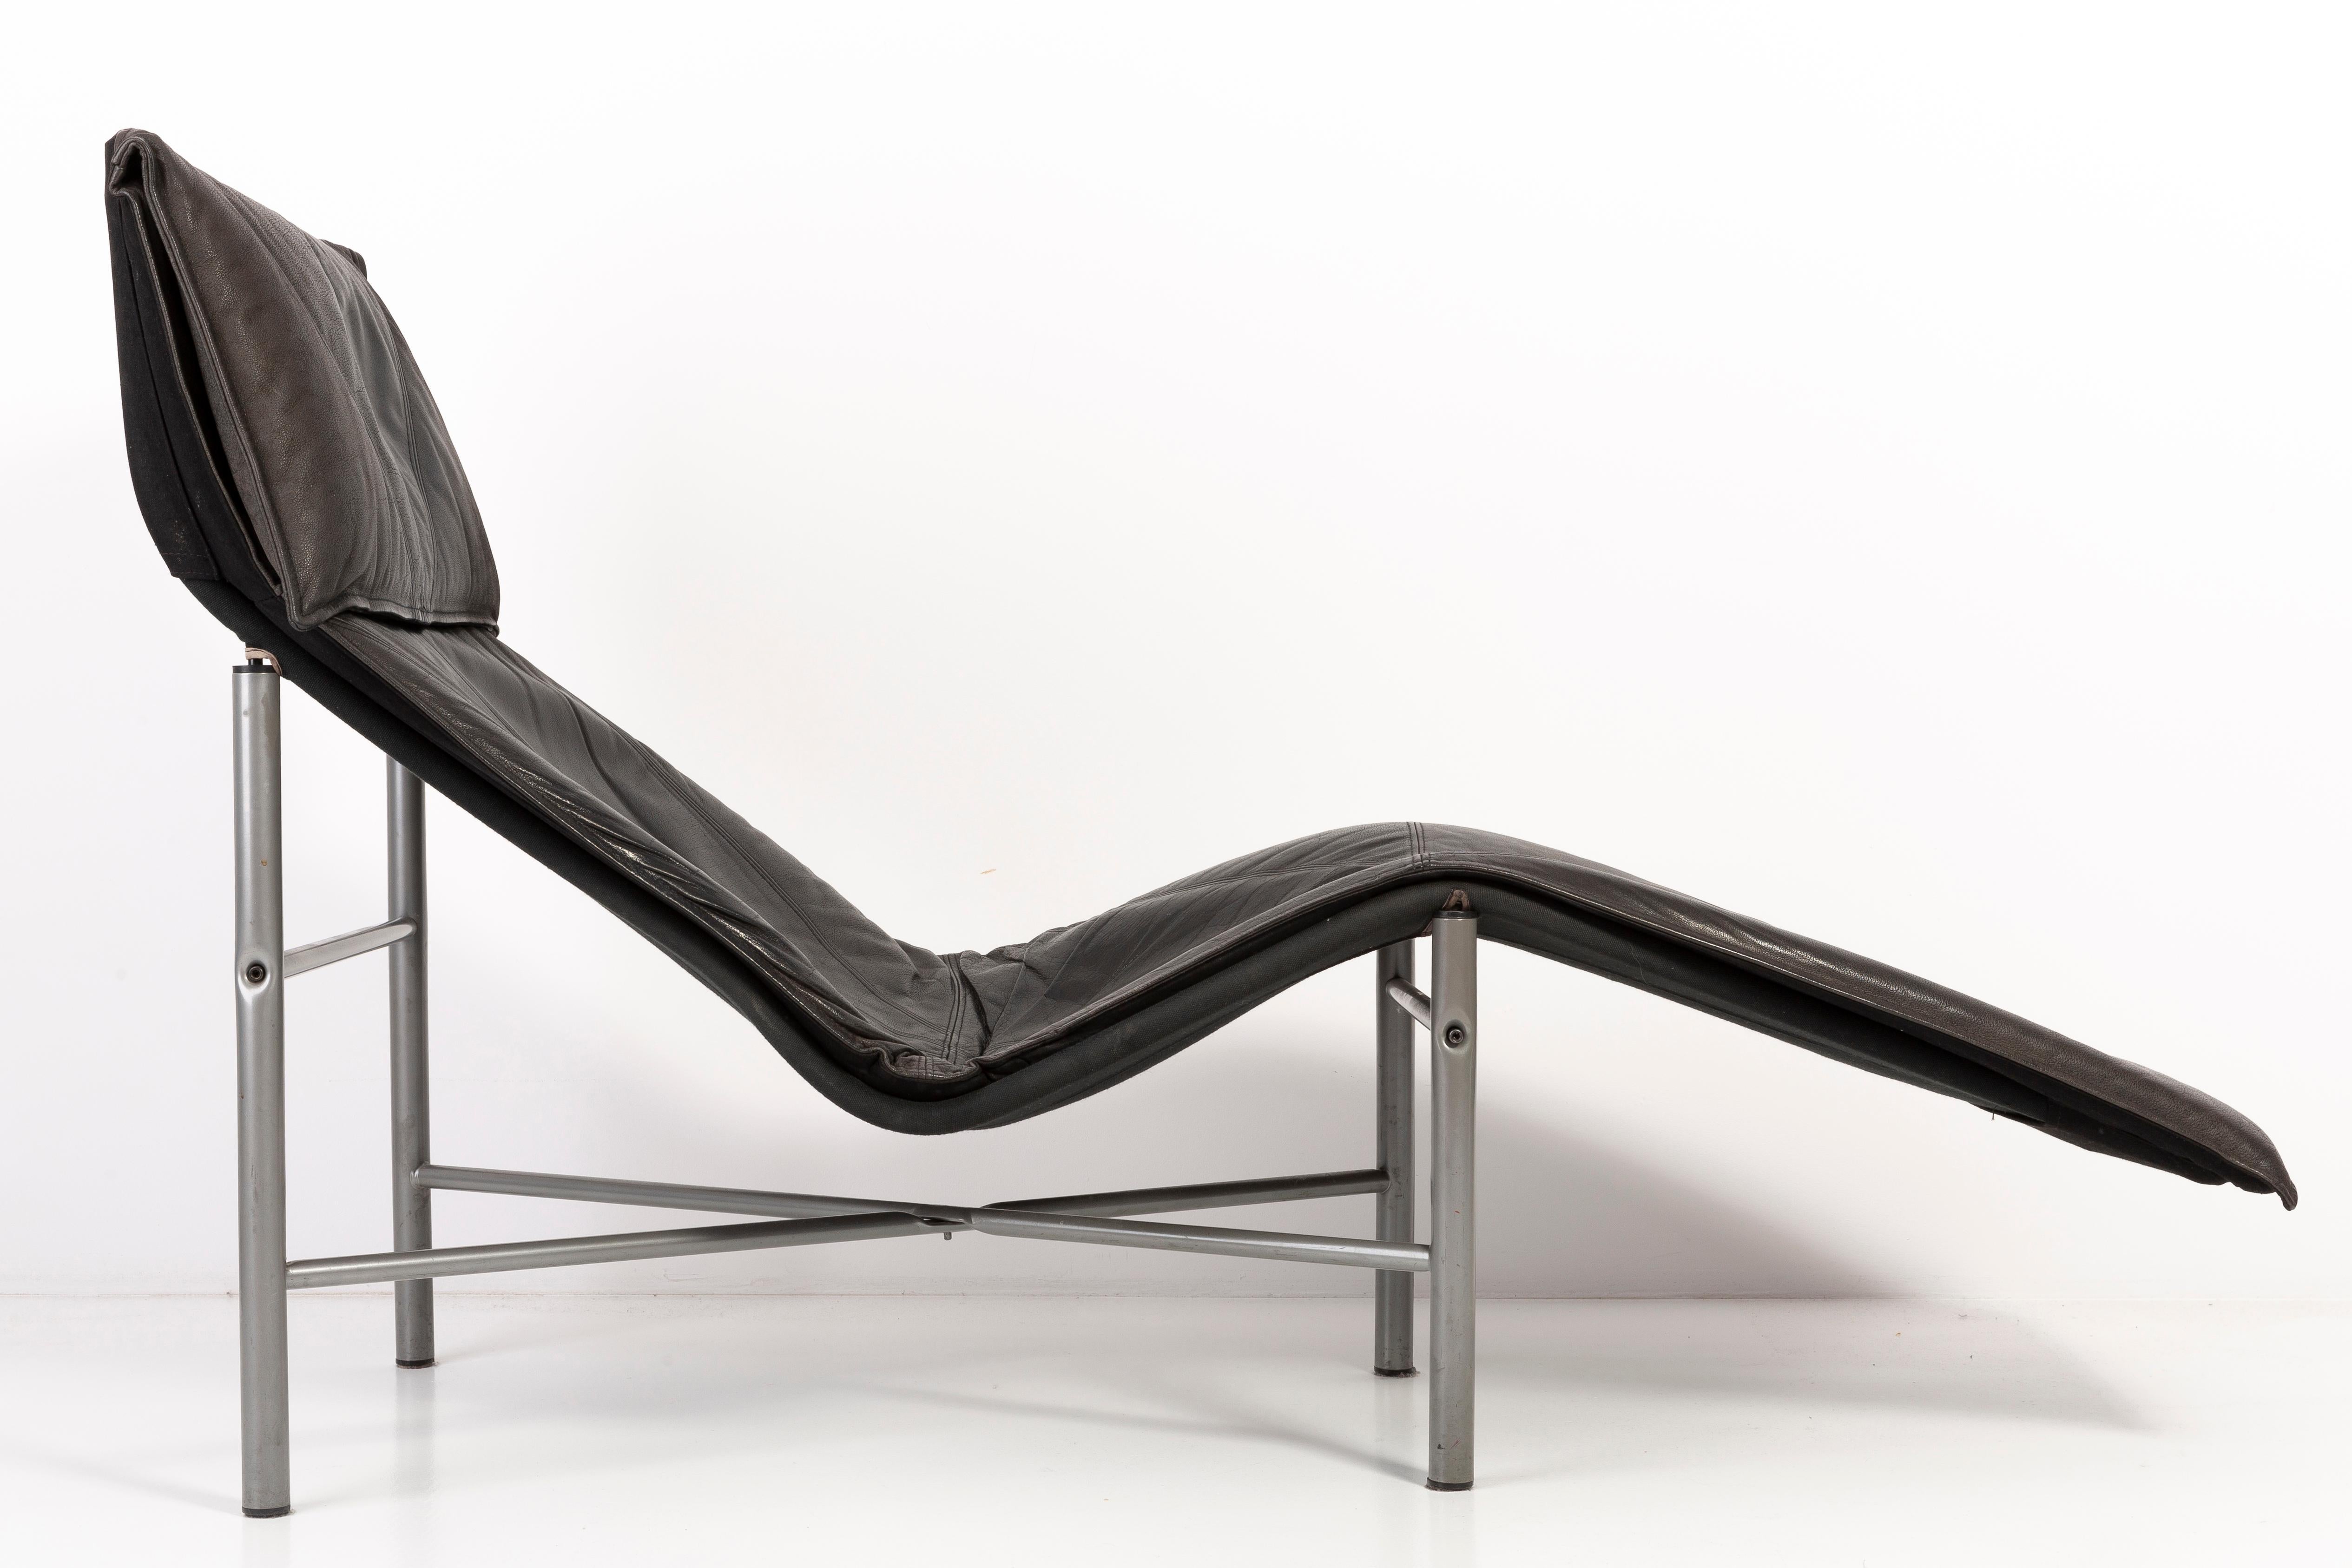 Steel Midcentury Danish Modern Black Leather Chaise Lounge Chair by Tord Björklund